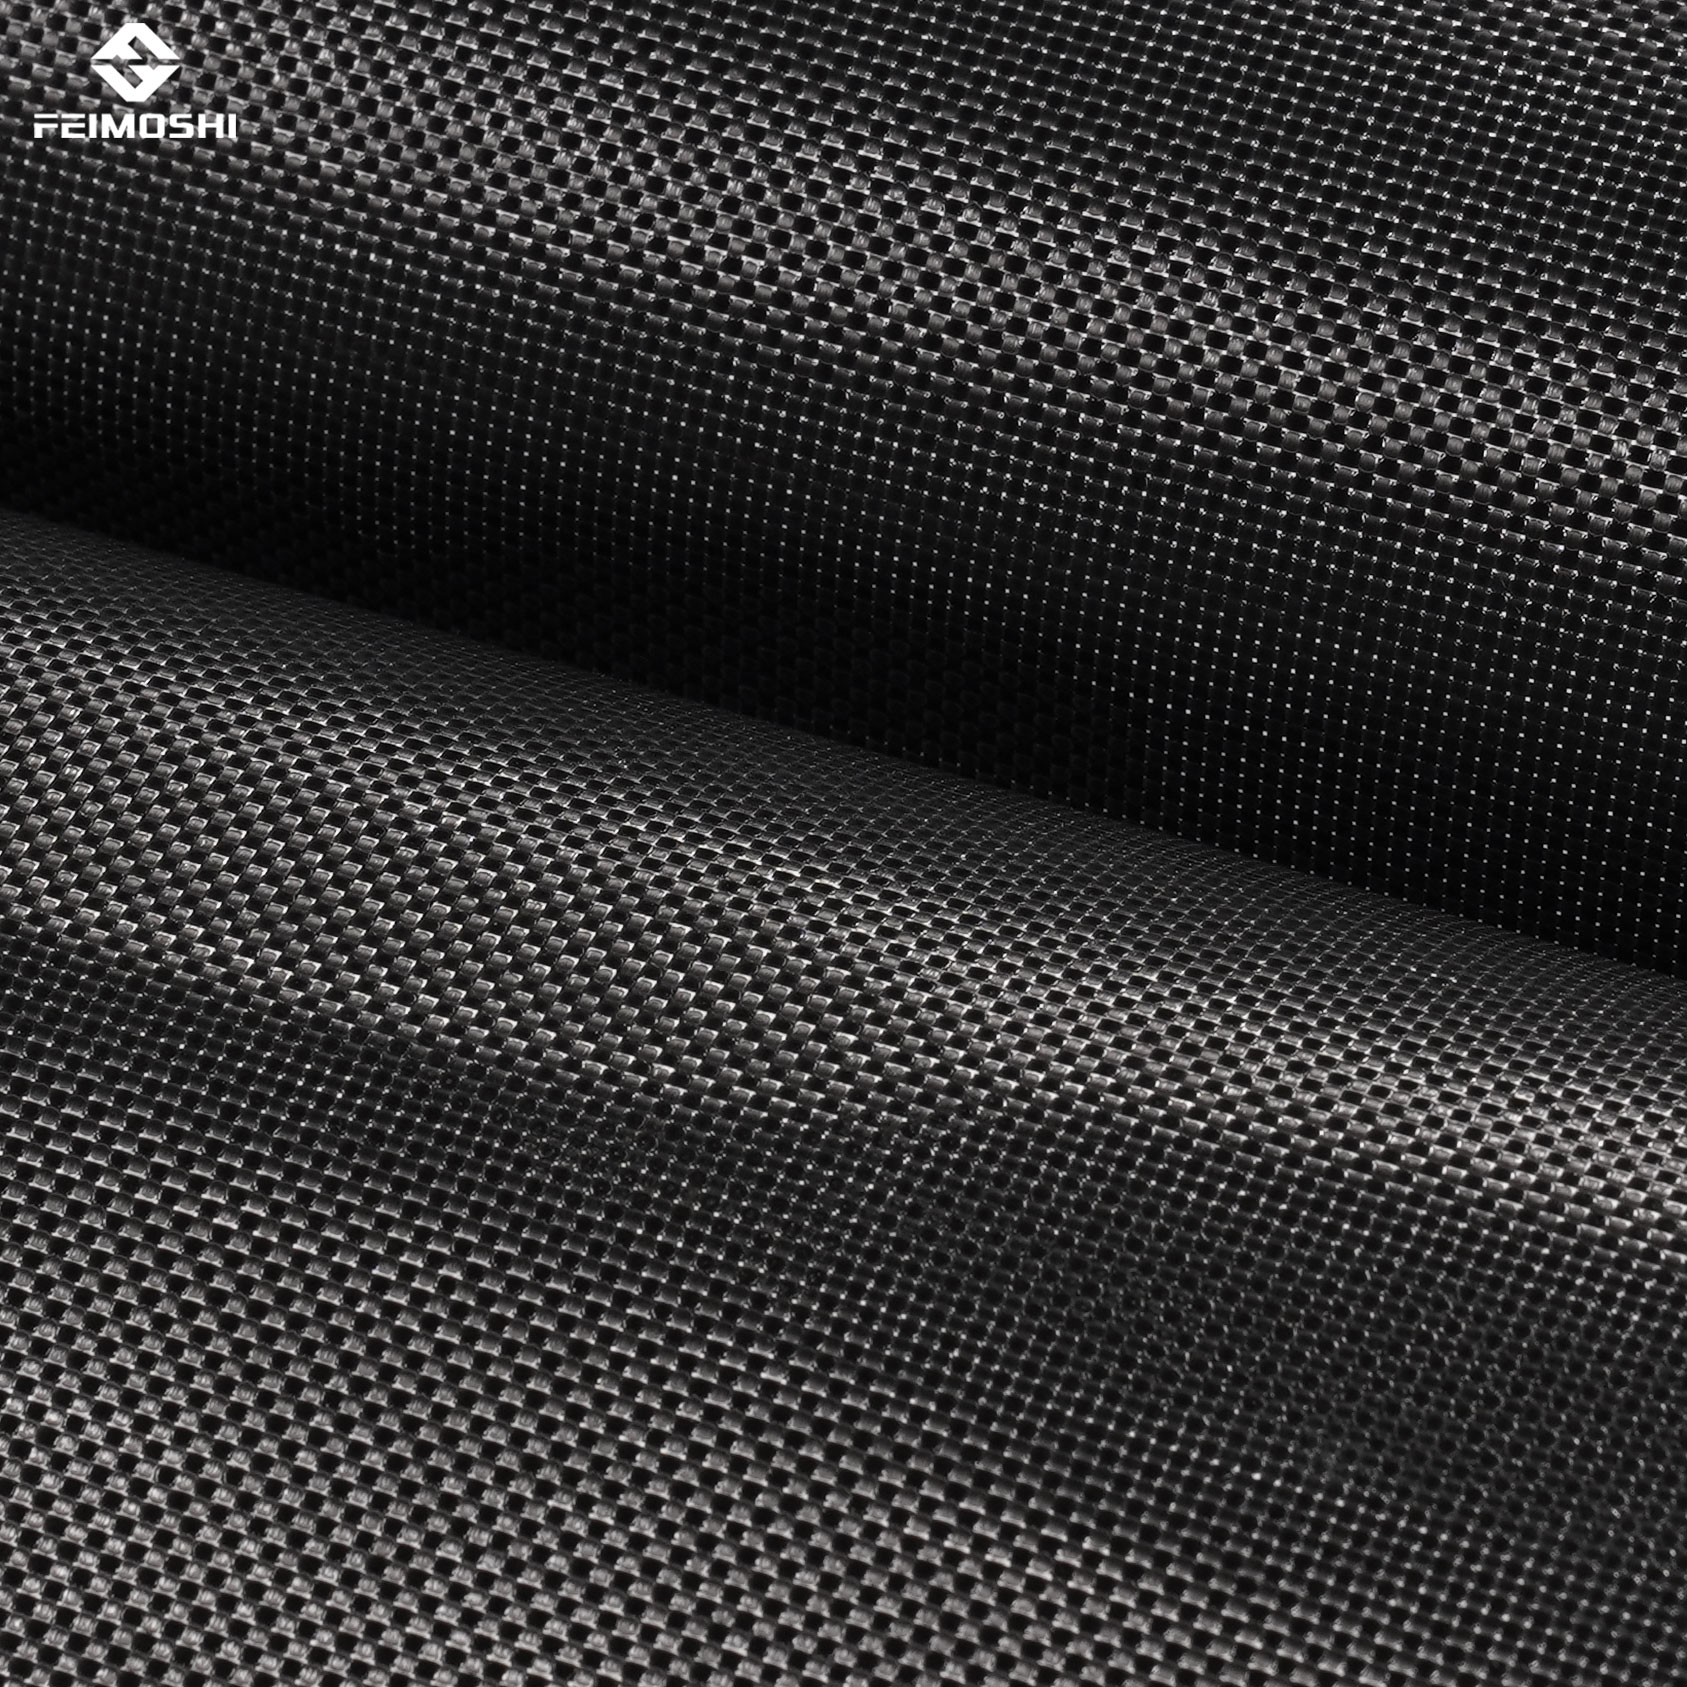 2021 Good Quality Cut Cnc - 3K twill matte 200g prepreg carbon fiber cloth – Feimoshi